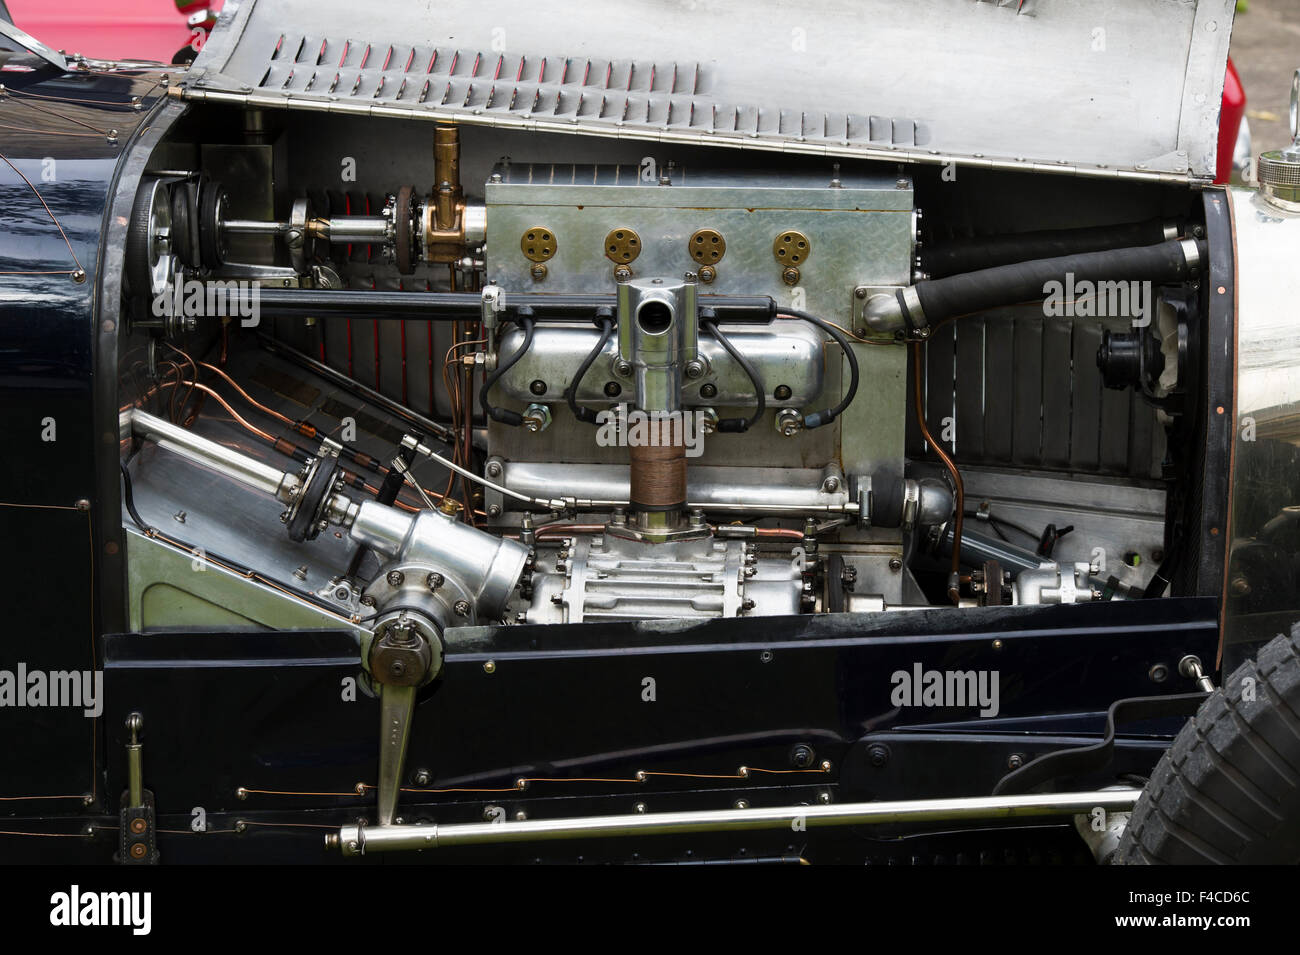 Bugatti type 34 racing car engine Stock Photo